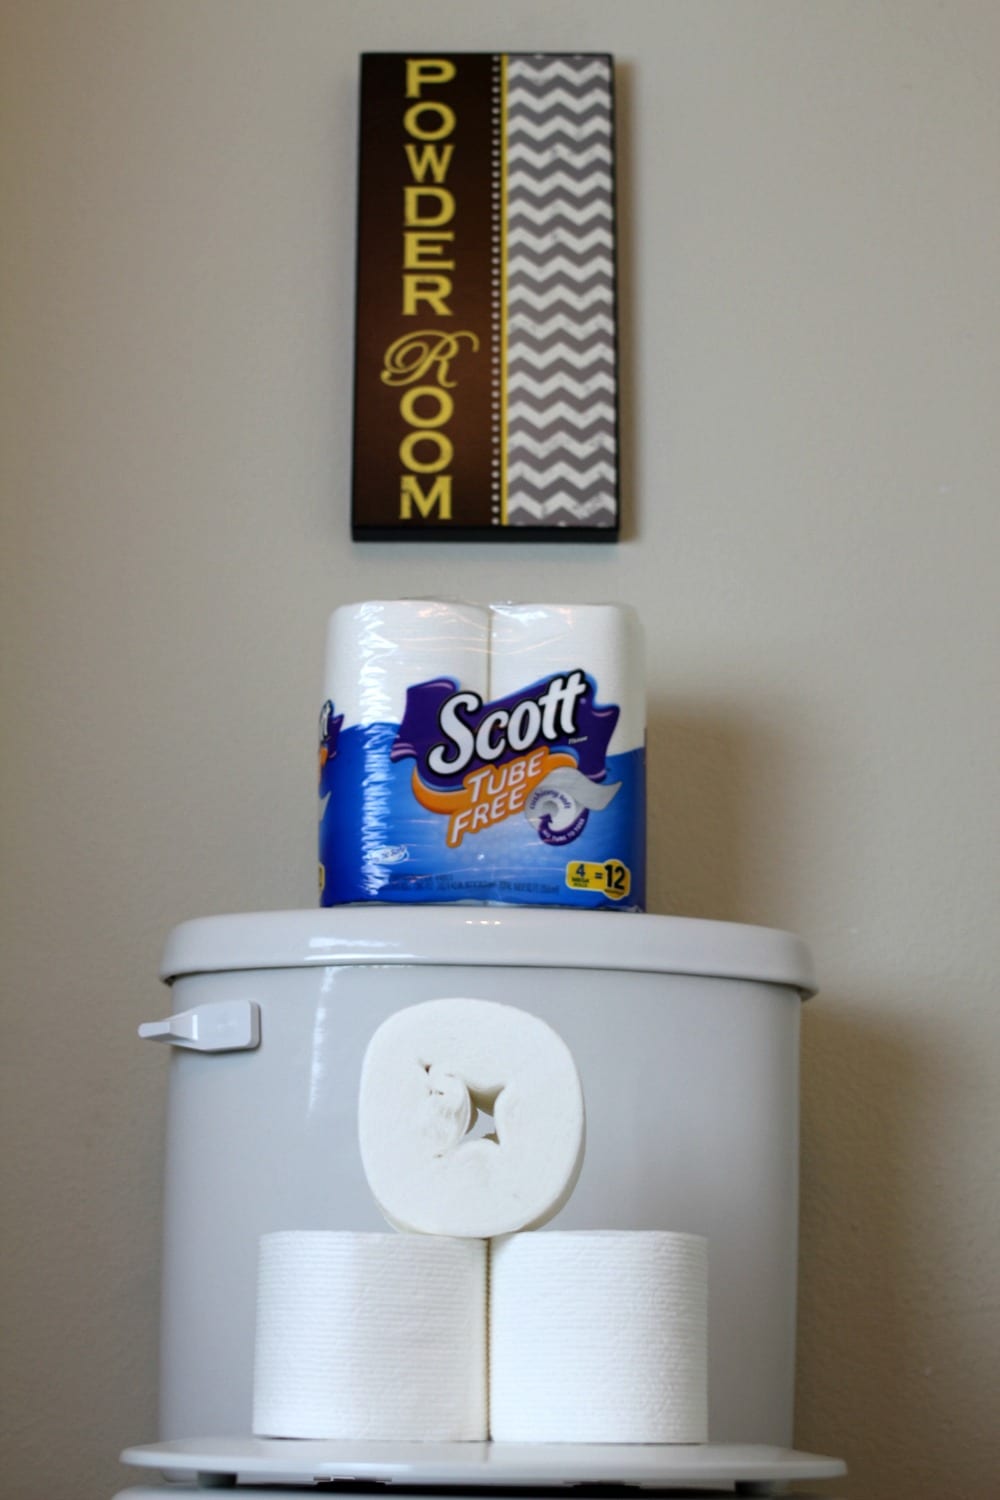 Scott Tube Free toilet paper-03